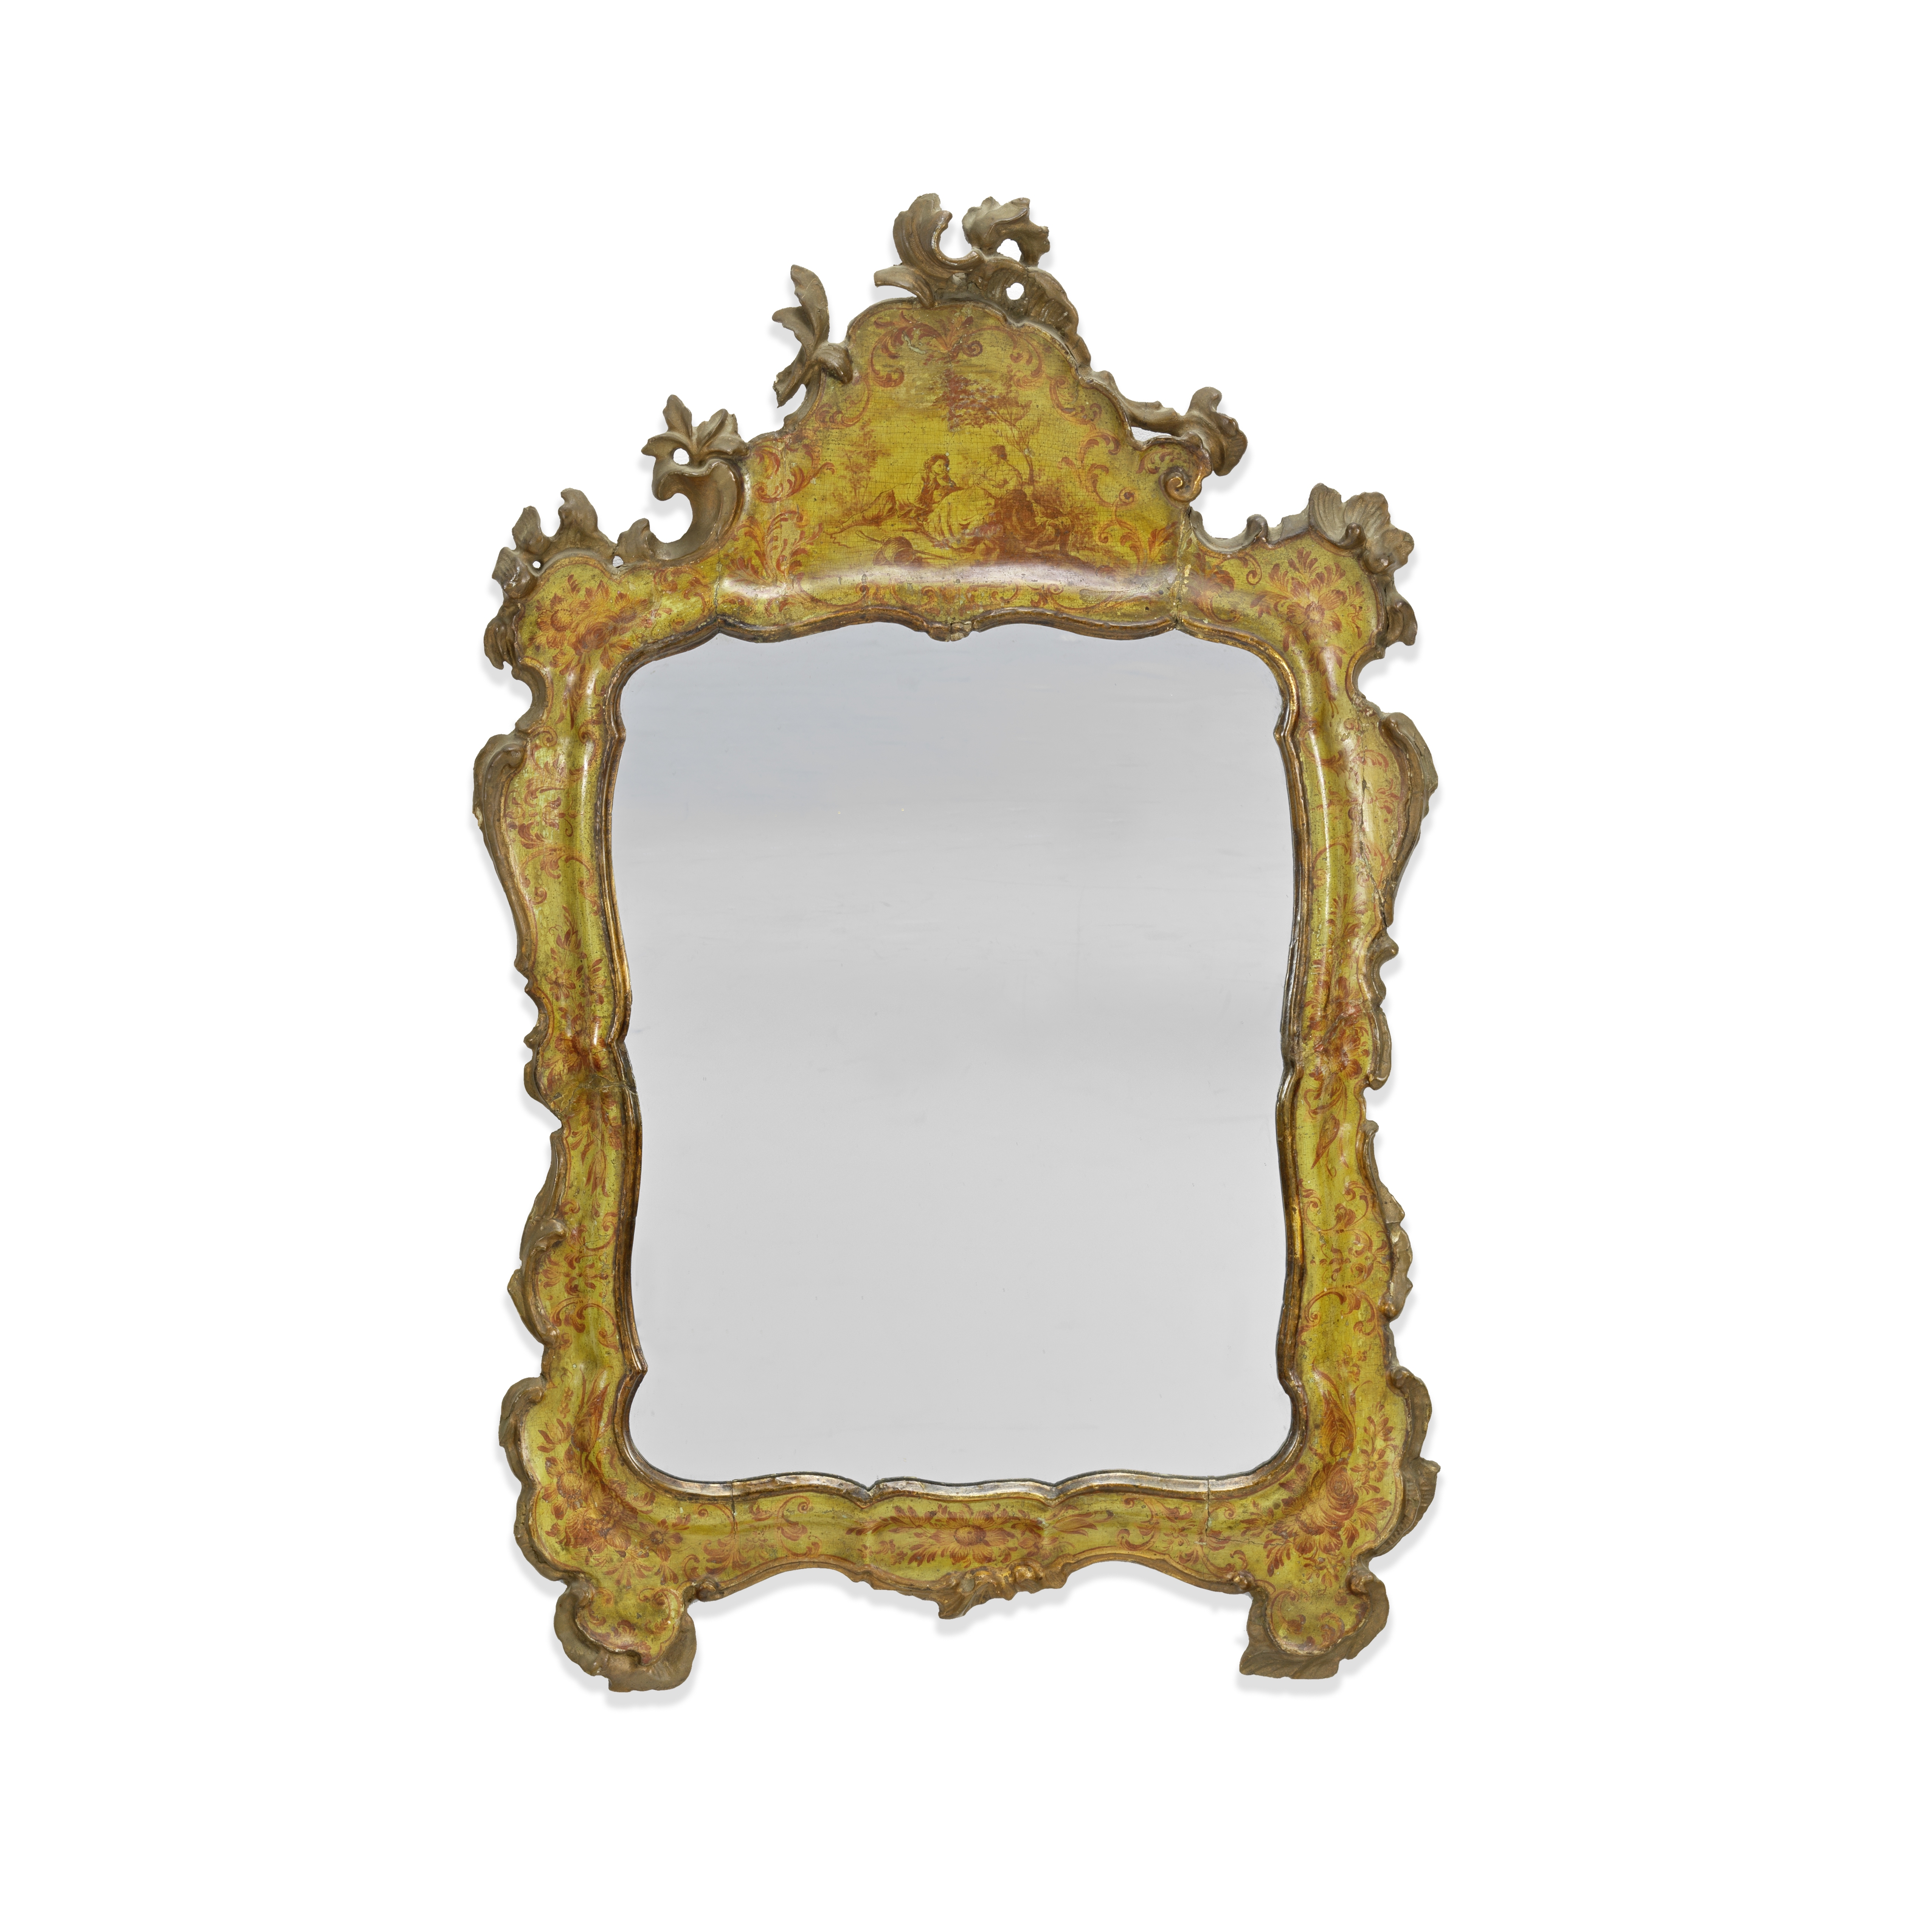 An Italian second half 18th century 'lacca' and parcel gilt mirror Venetian